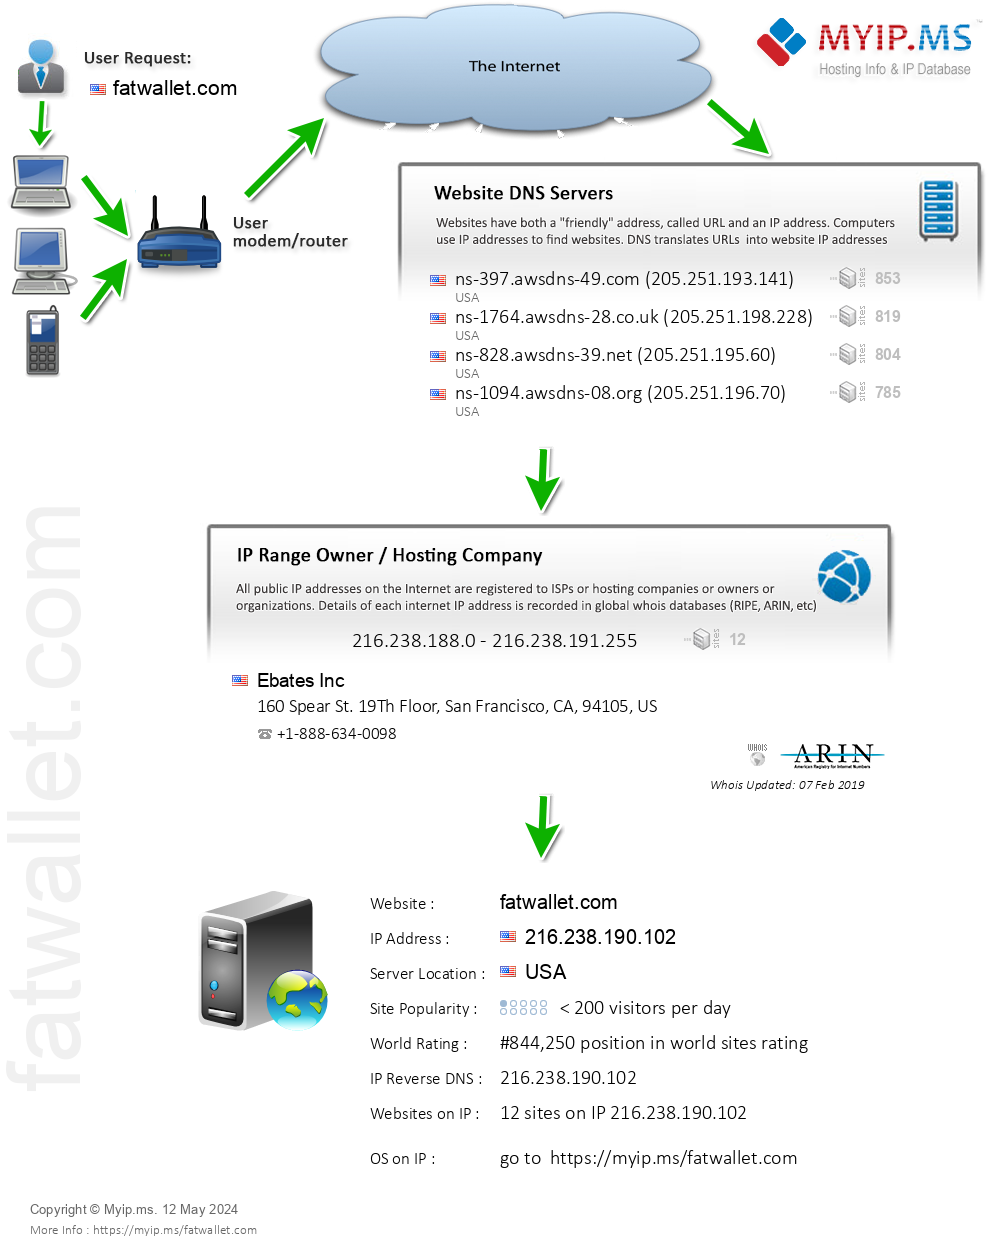 Fatwallet.com - Website Hosting Visual IP Diagram